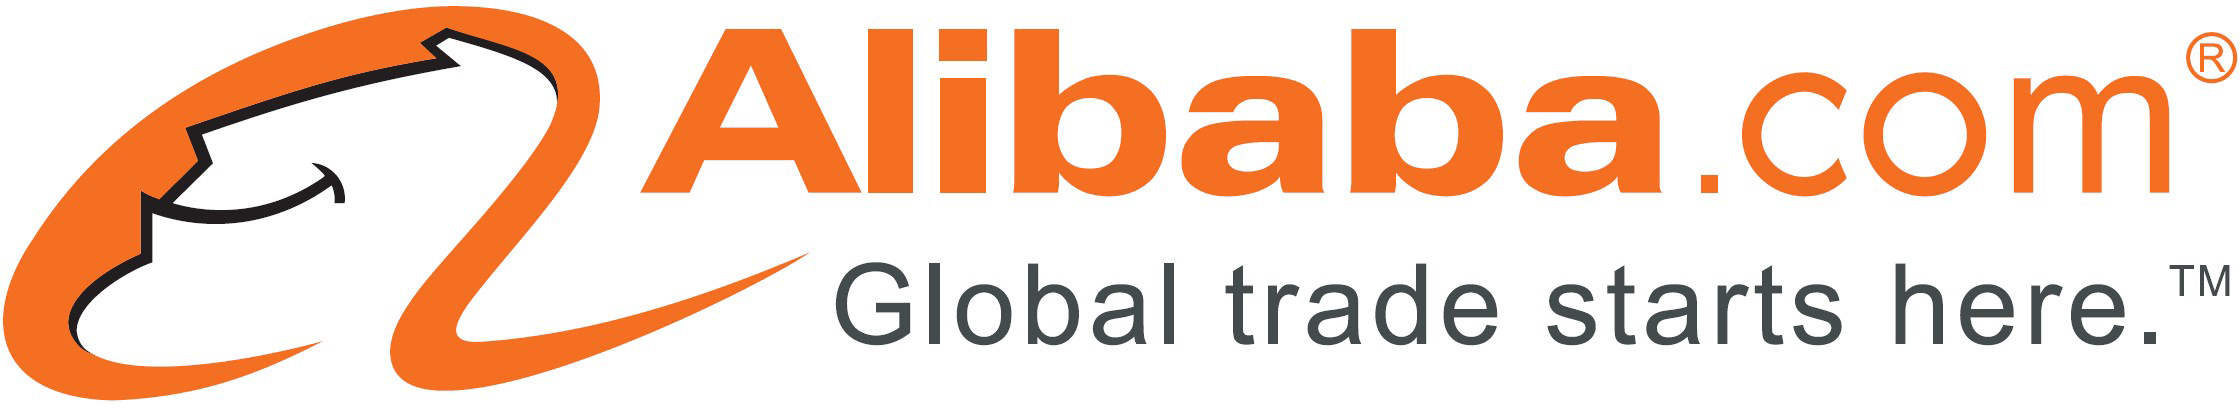 Alibaba Group logo - Alibaba 